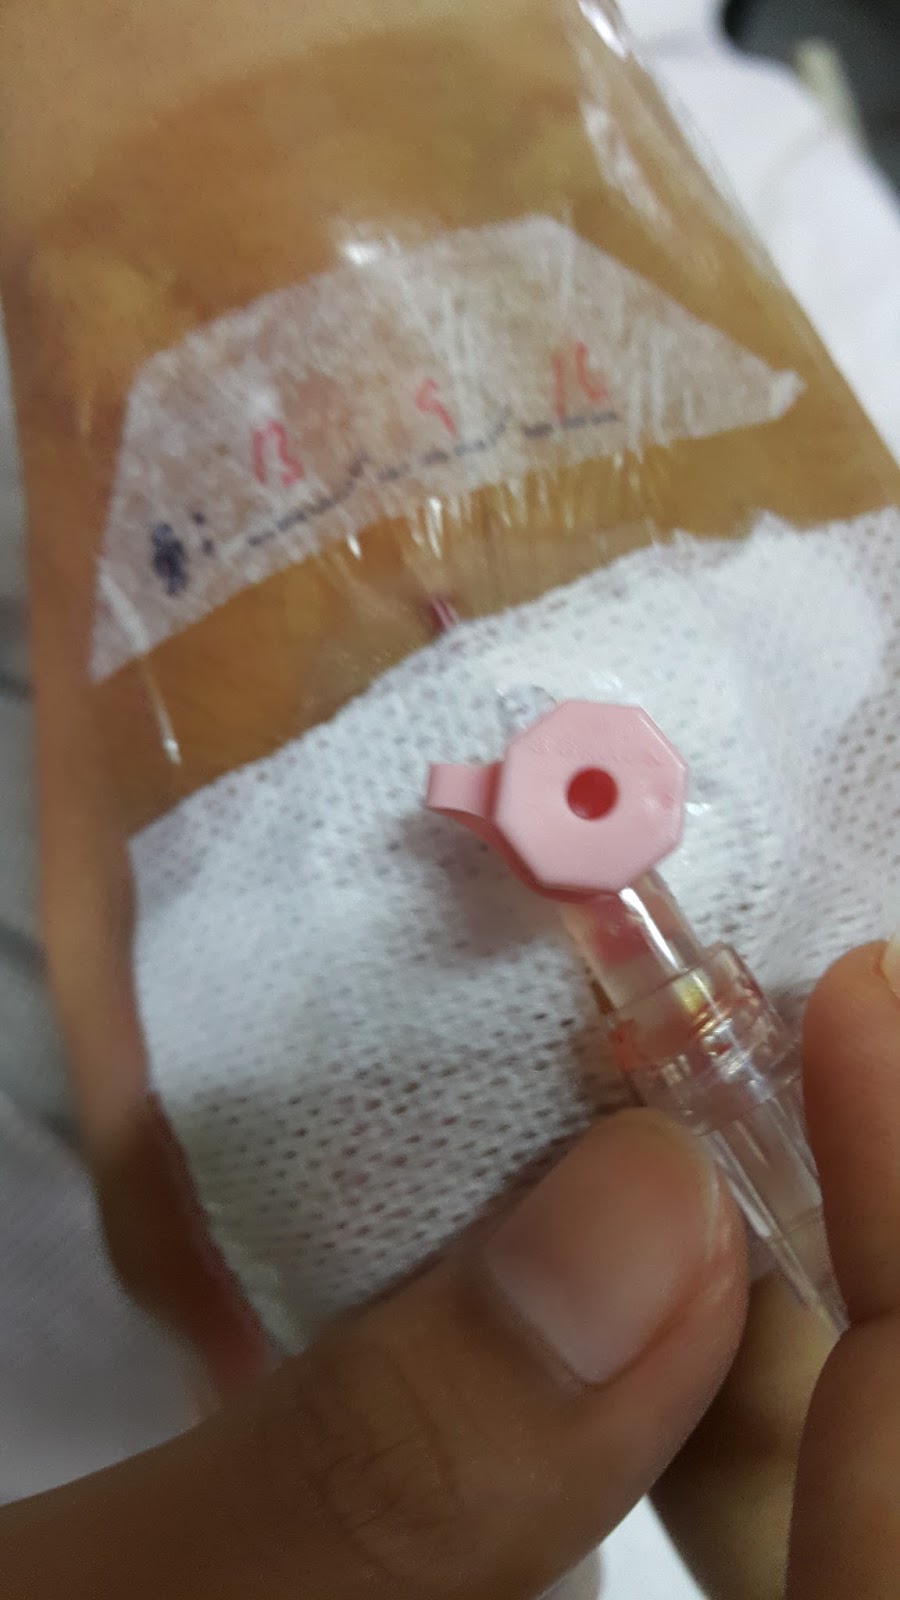 Shazika Shahrim: Pengalaman pertama masuk hospital